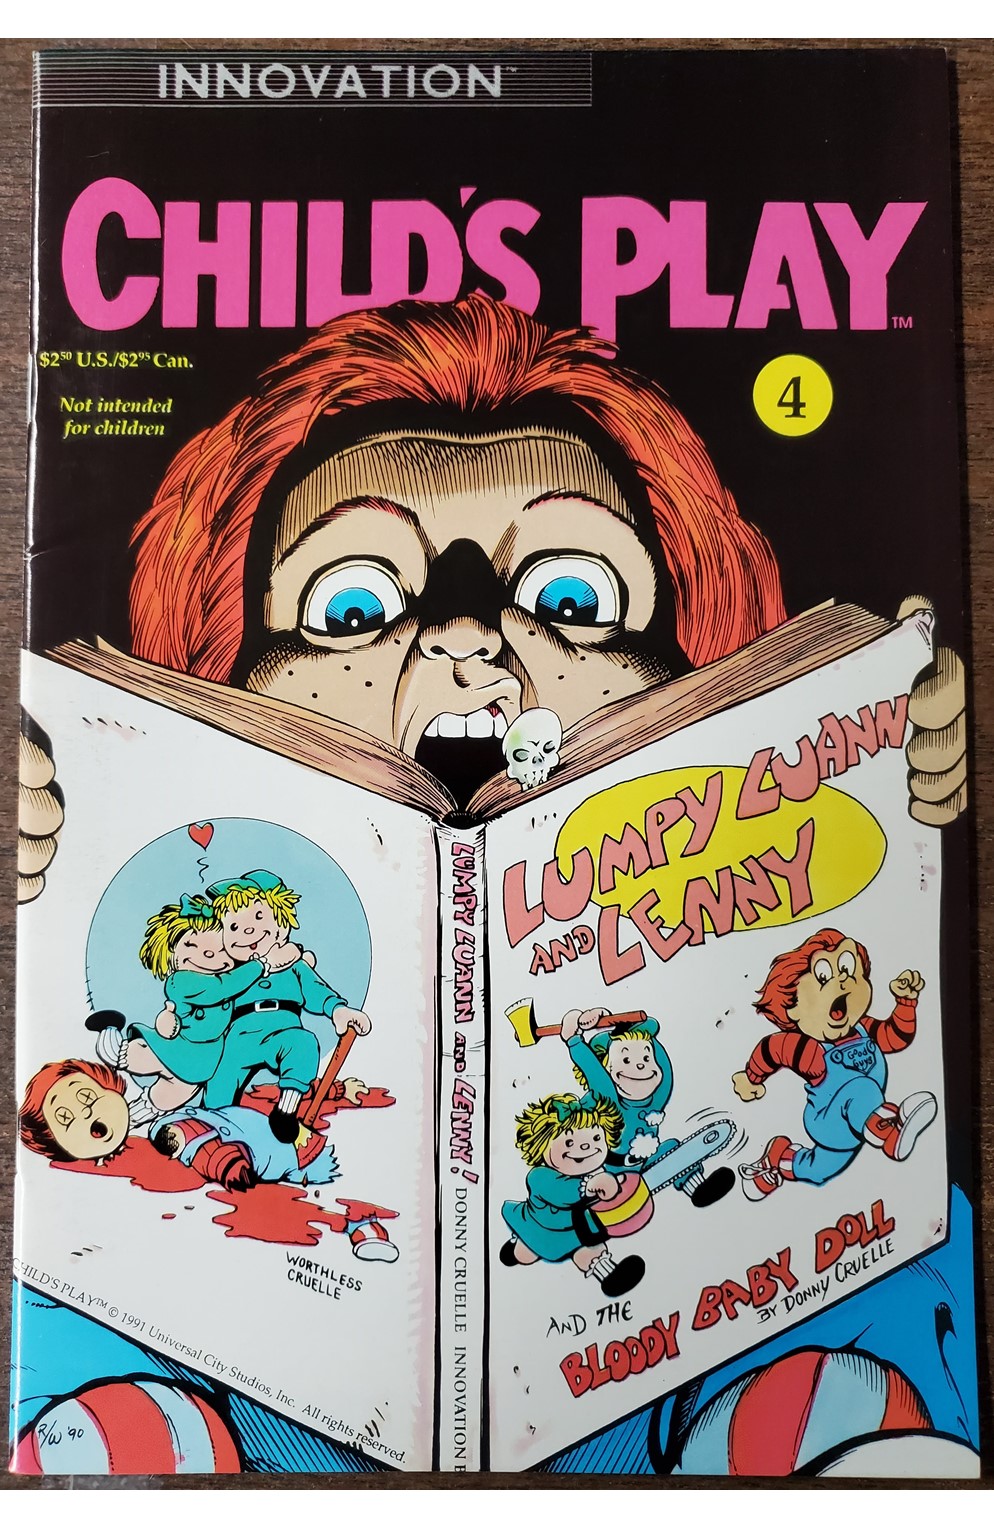 Buy Child's Play #4 (Innovation 1991) Chucky Rare Comic | Downtown Comics  Annex